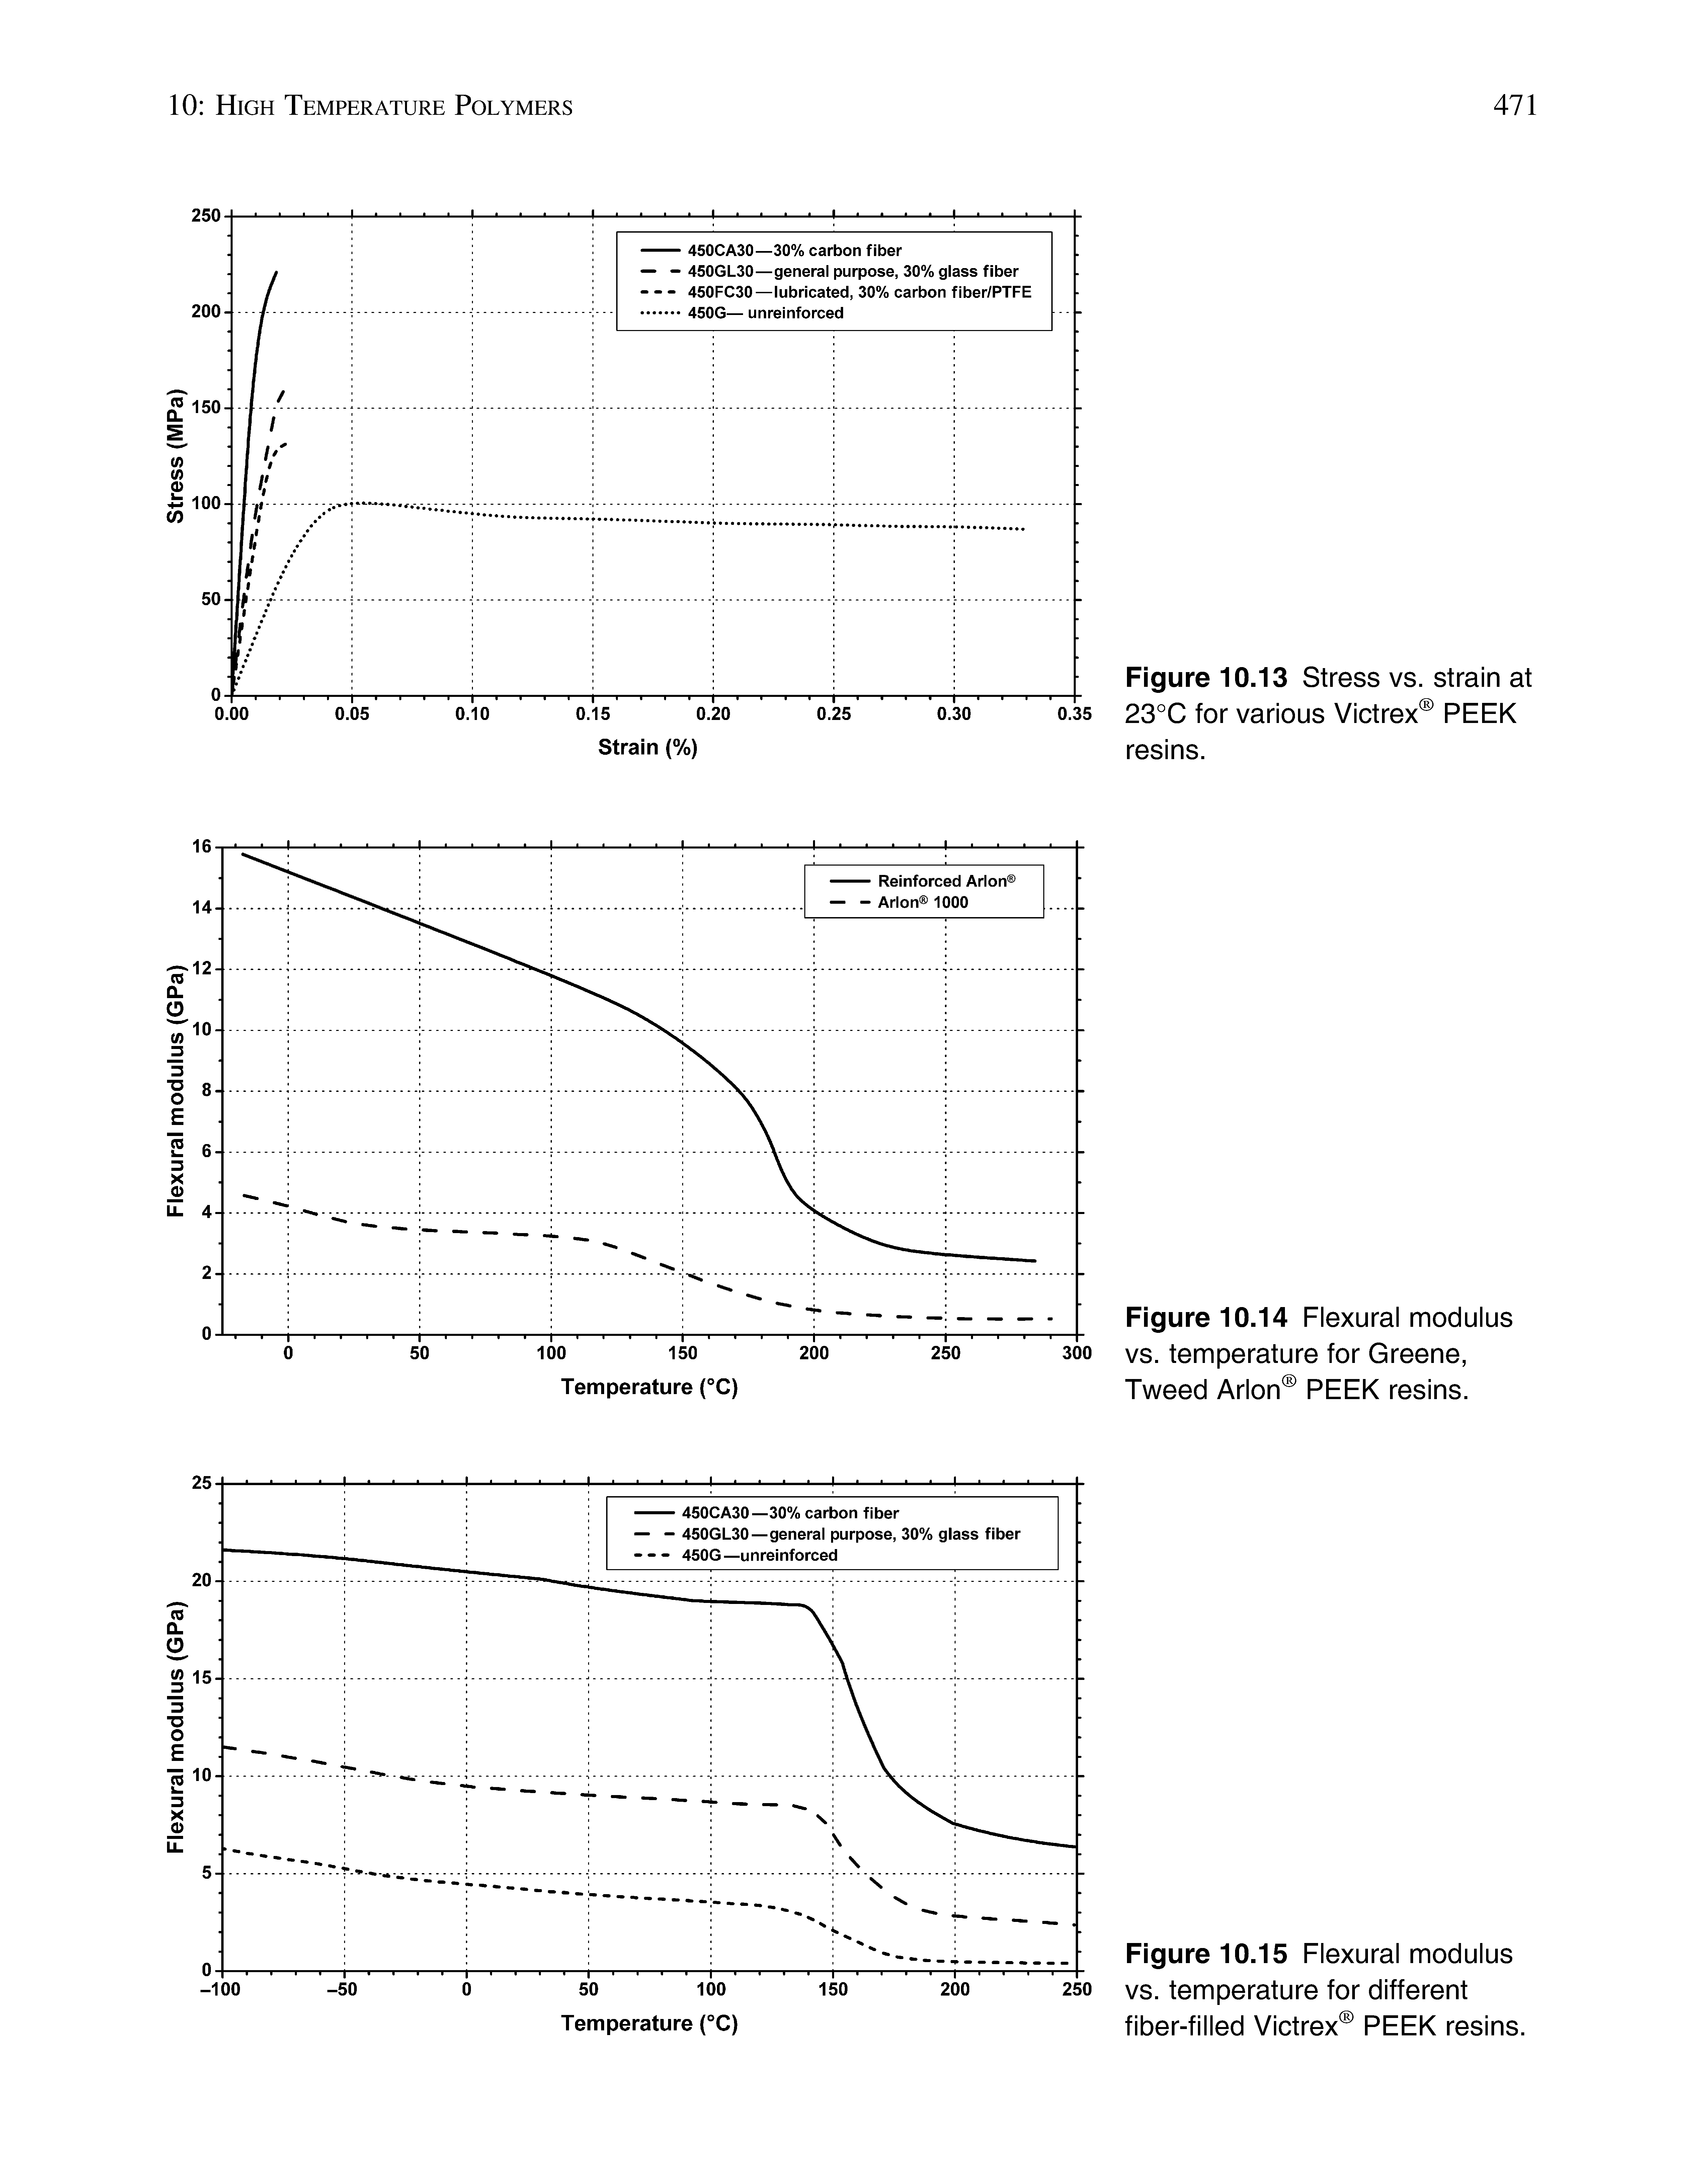 Figure 10.13 Stress vs. strain at 23°C for various Victrex PEEK resins.